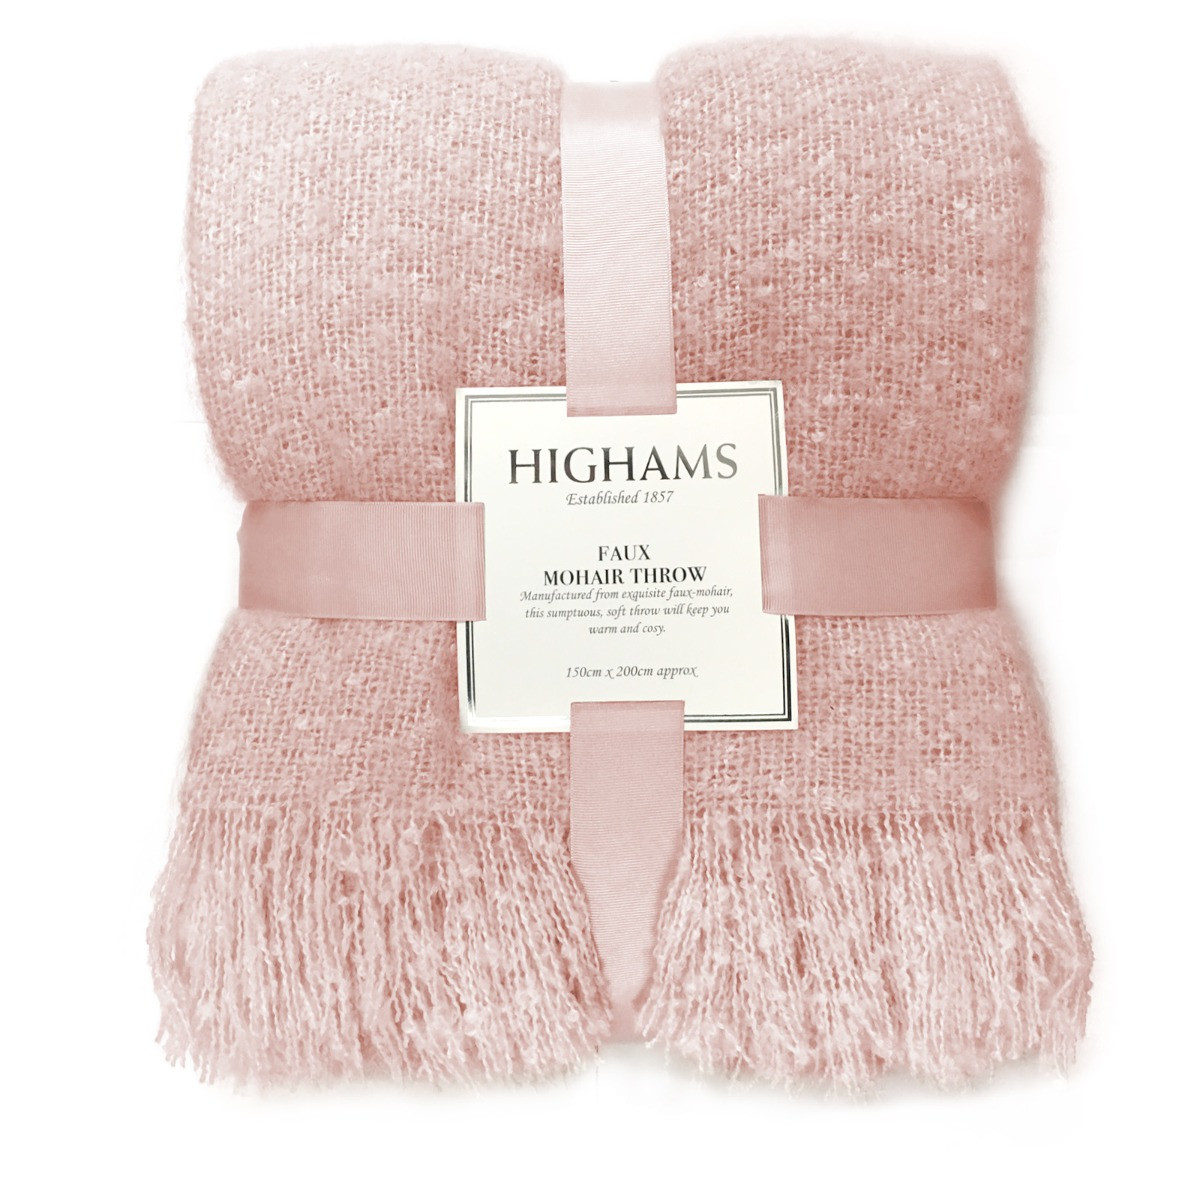 Highams Mohair Throw, Blush Pink - 150 x 200cm>